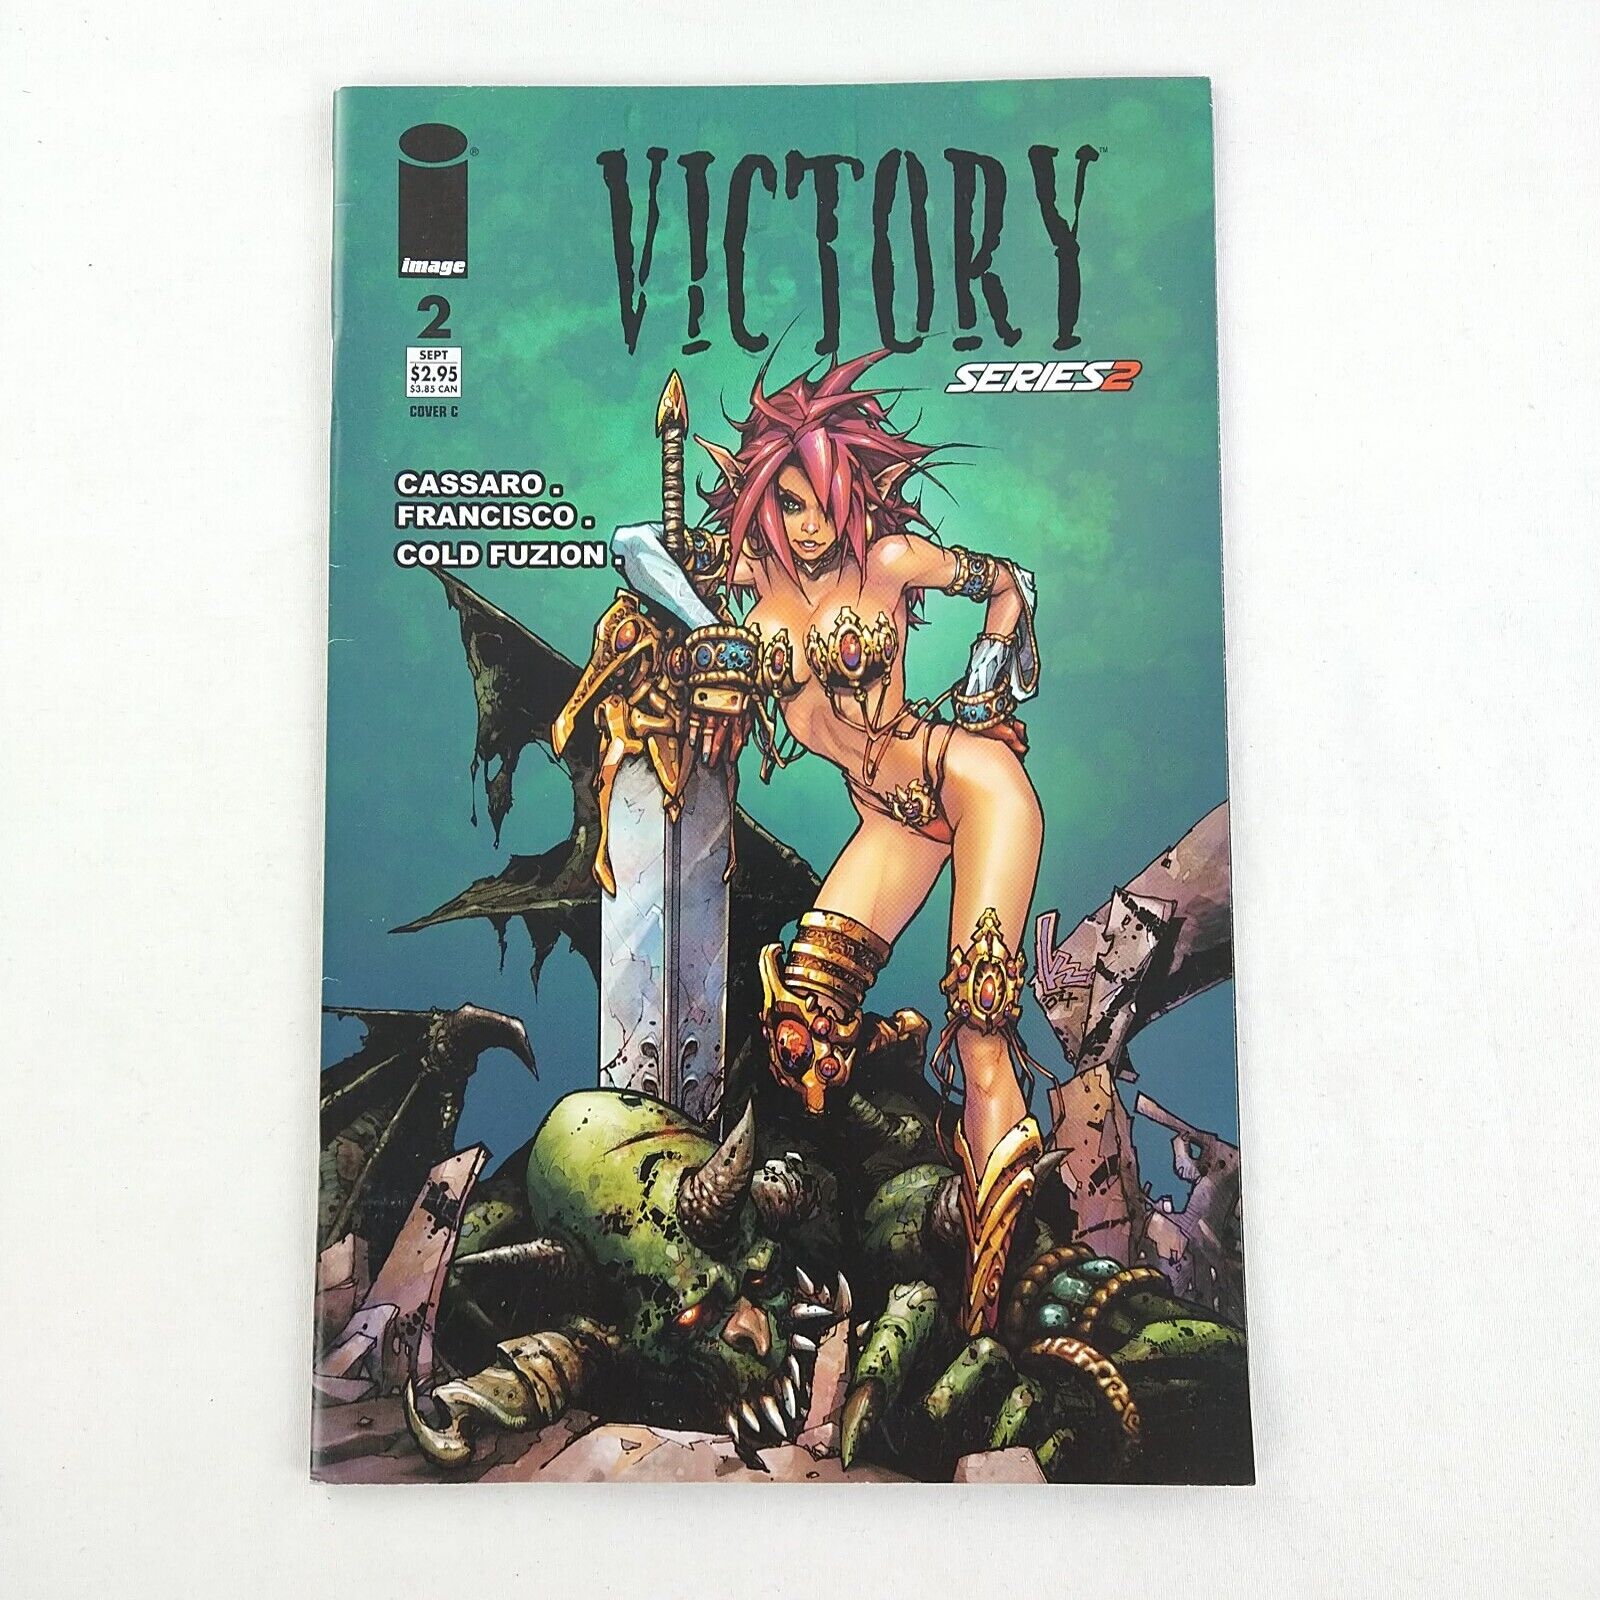 Victory #2 Series 2 (2004 Image Comics) Bad Girl Fantasy Art Cover